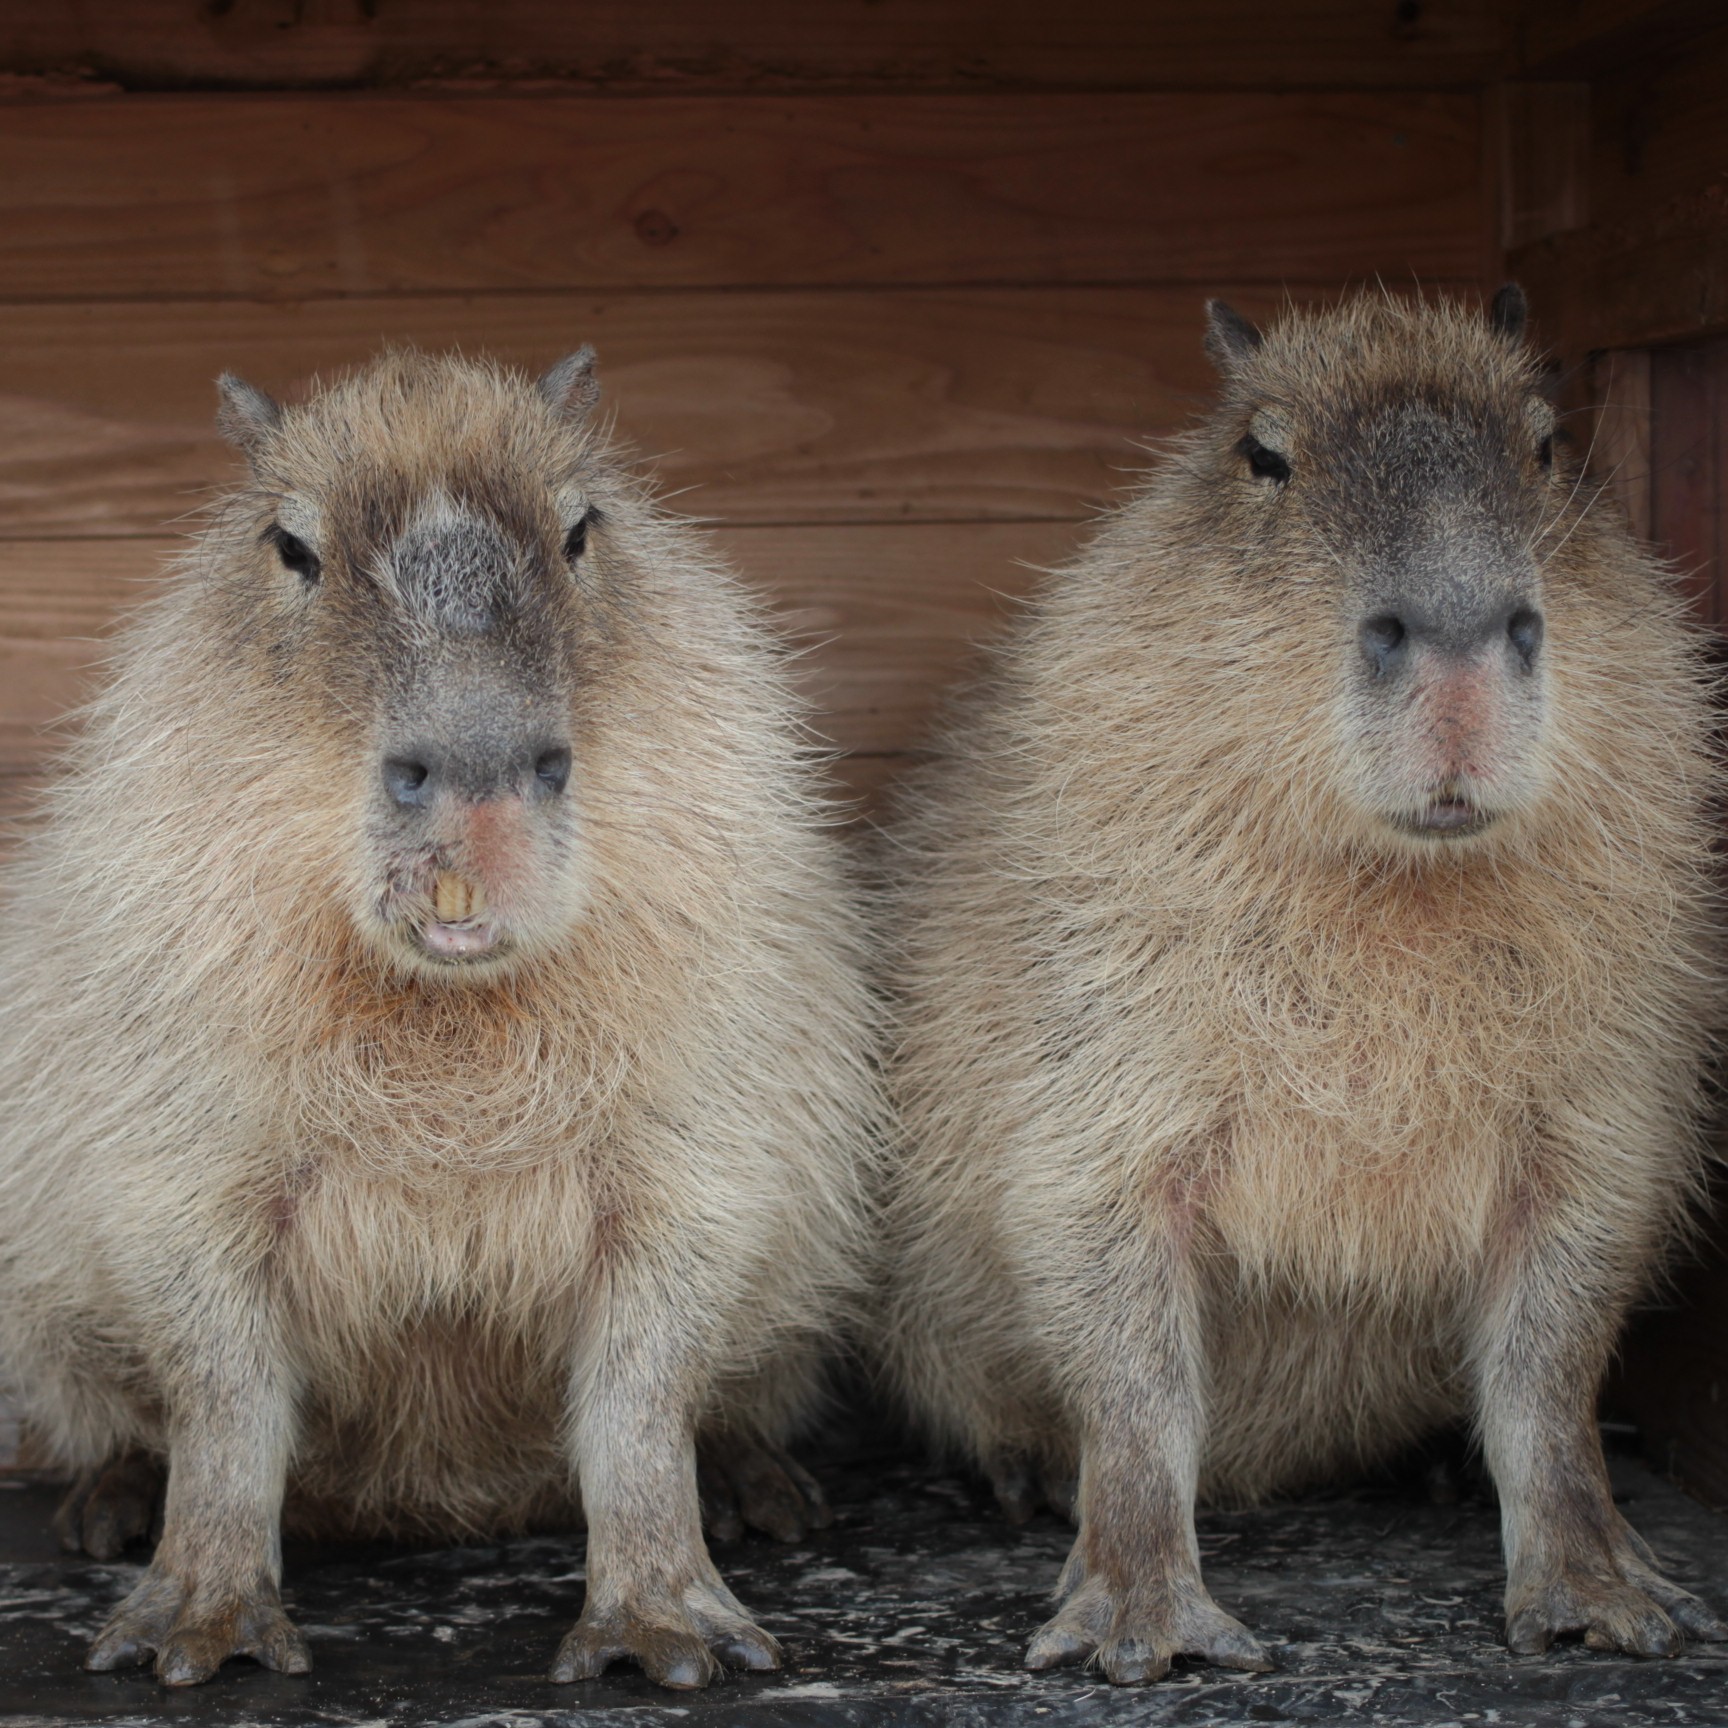 Toronto Is Cracking Down on Therapy Capybaras